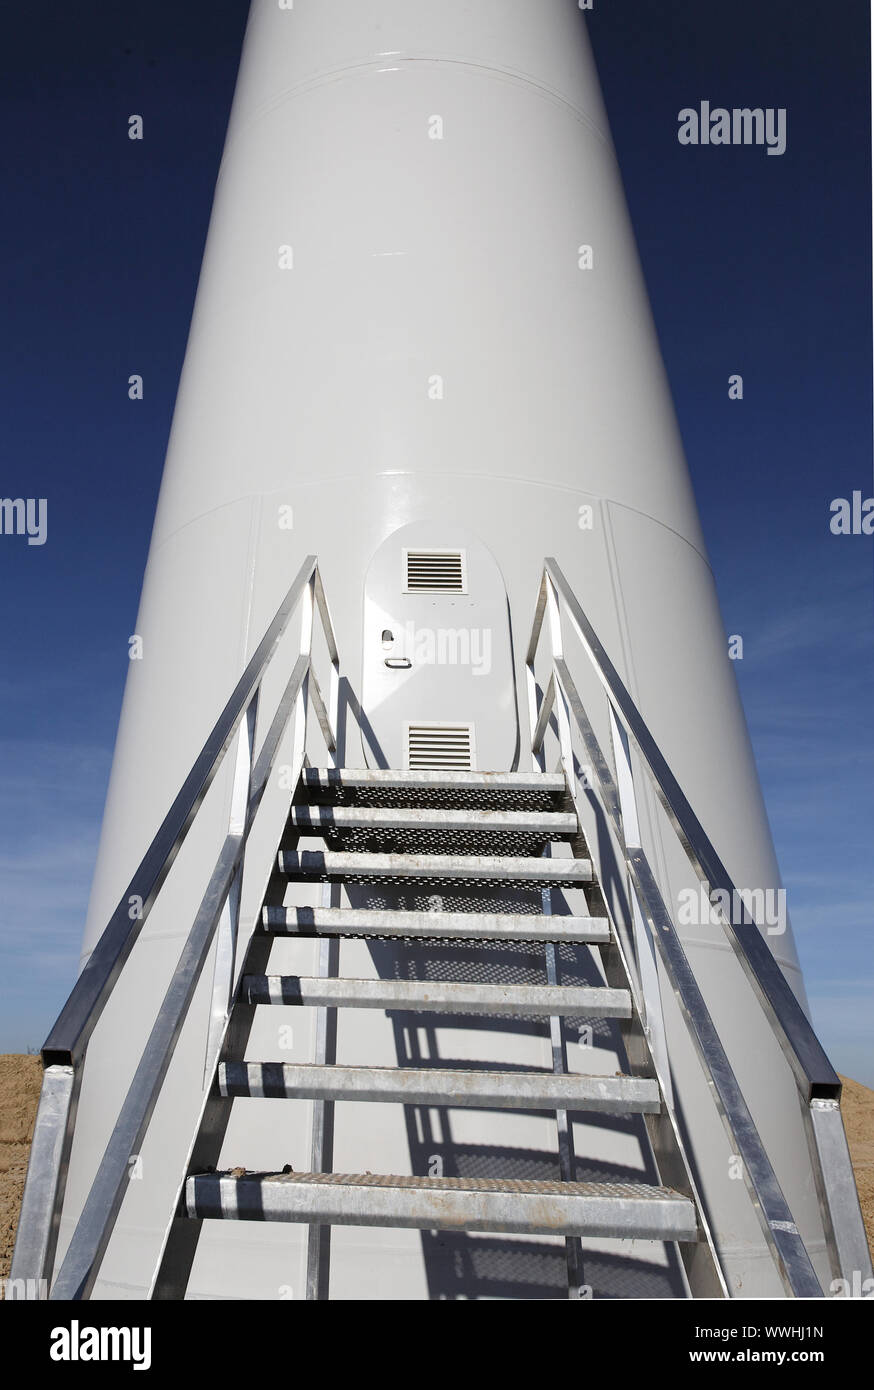 Access to a wind turbine Stock Photo